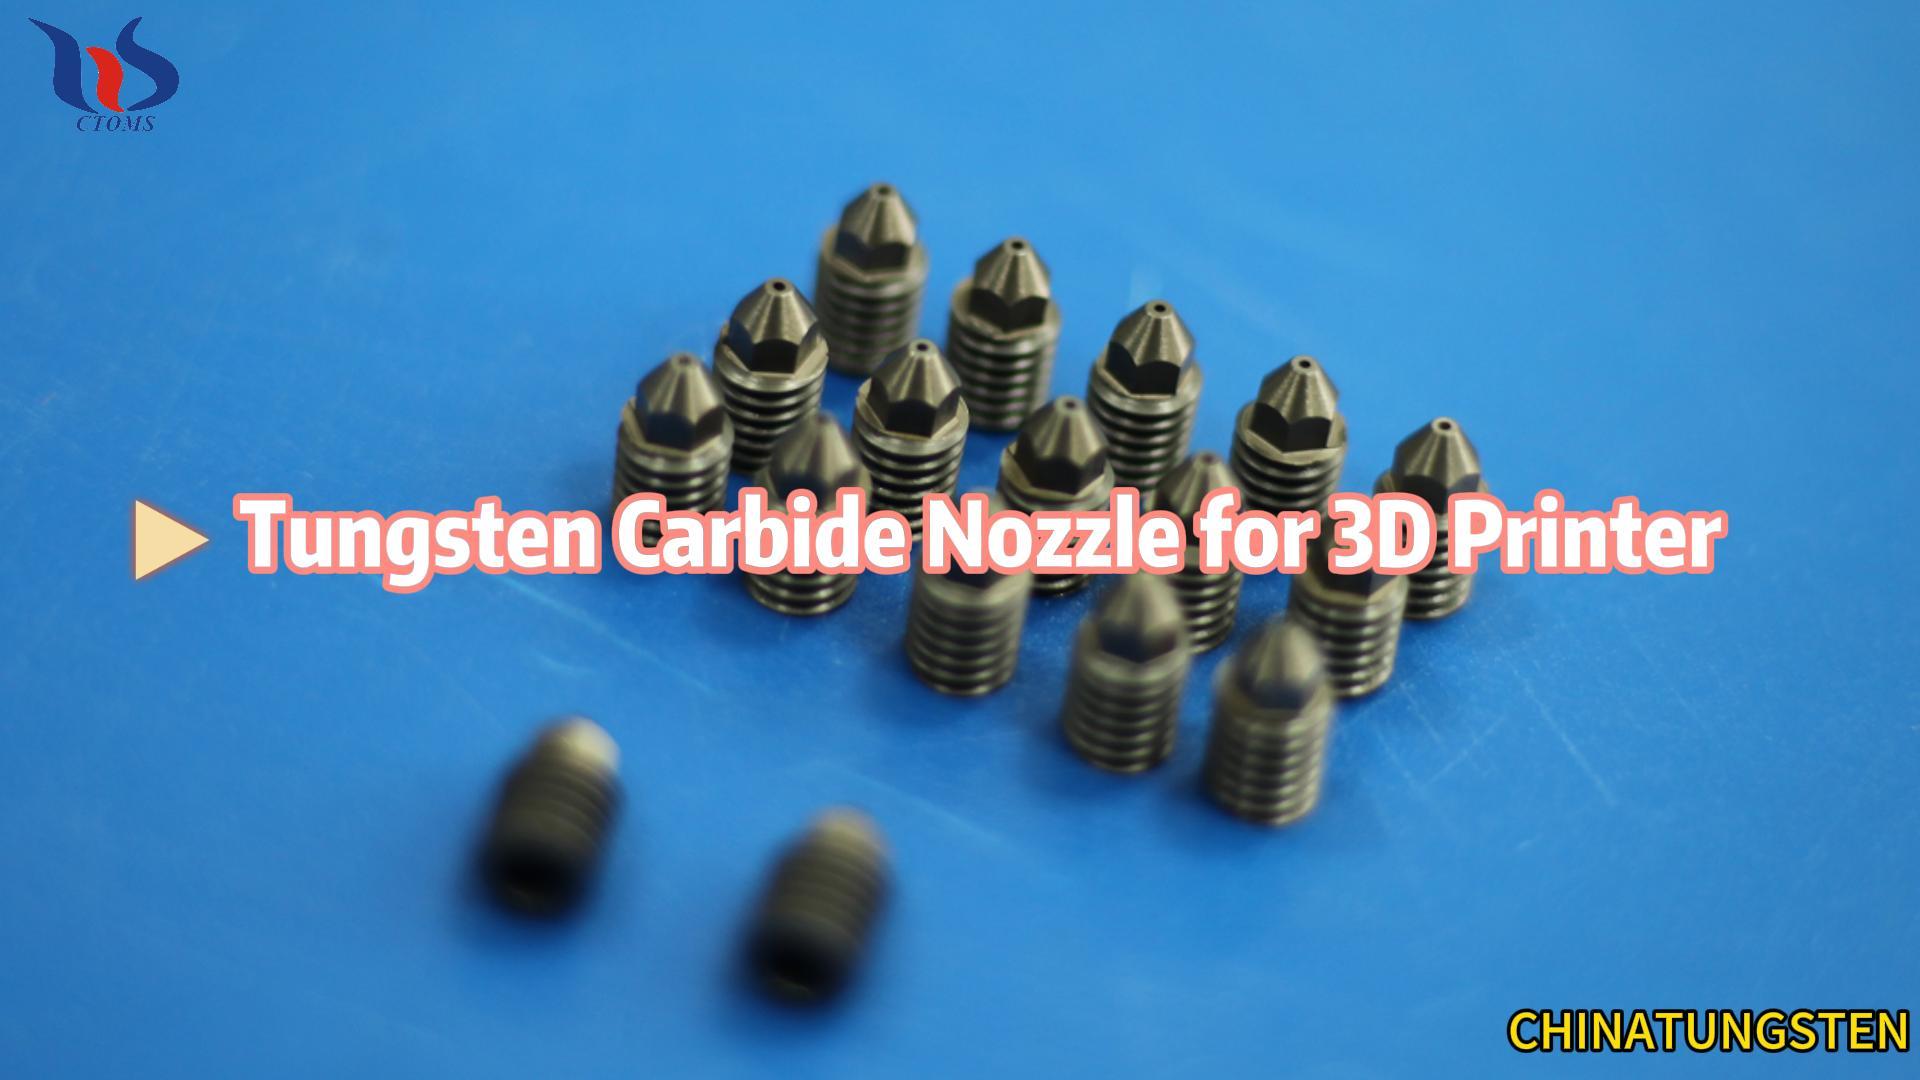 Tungsten Carbide Nozzle for 3D Printer